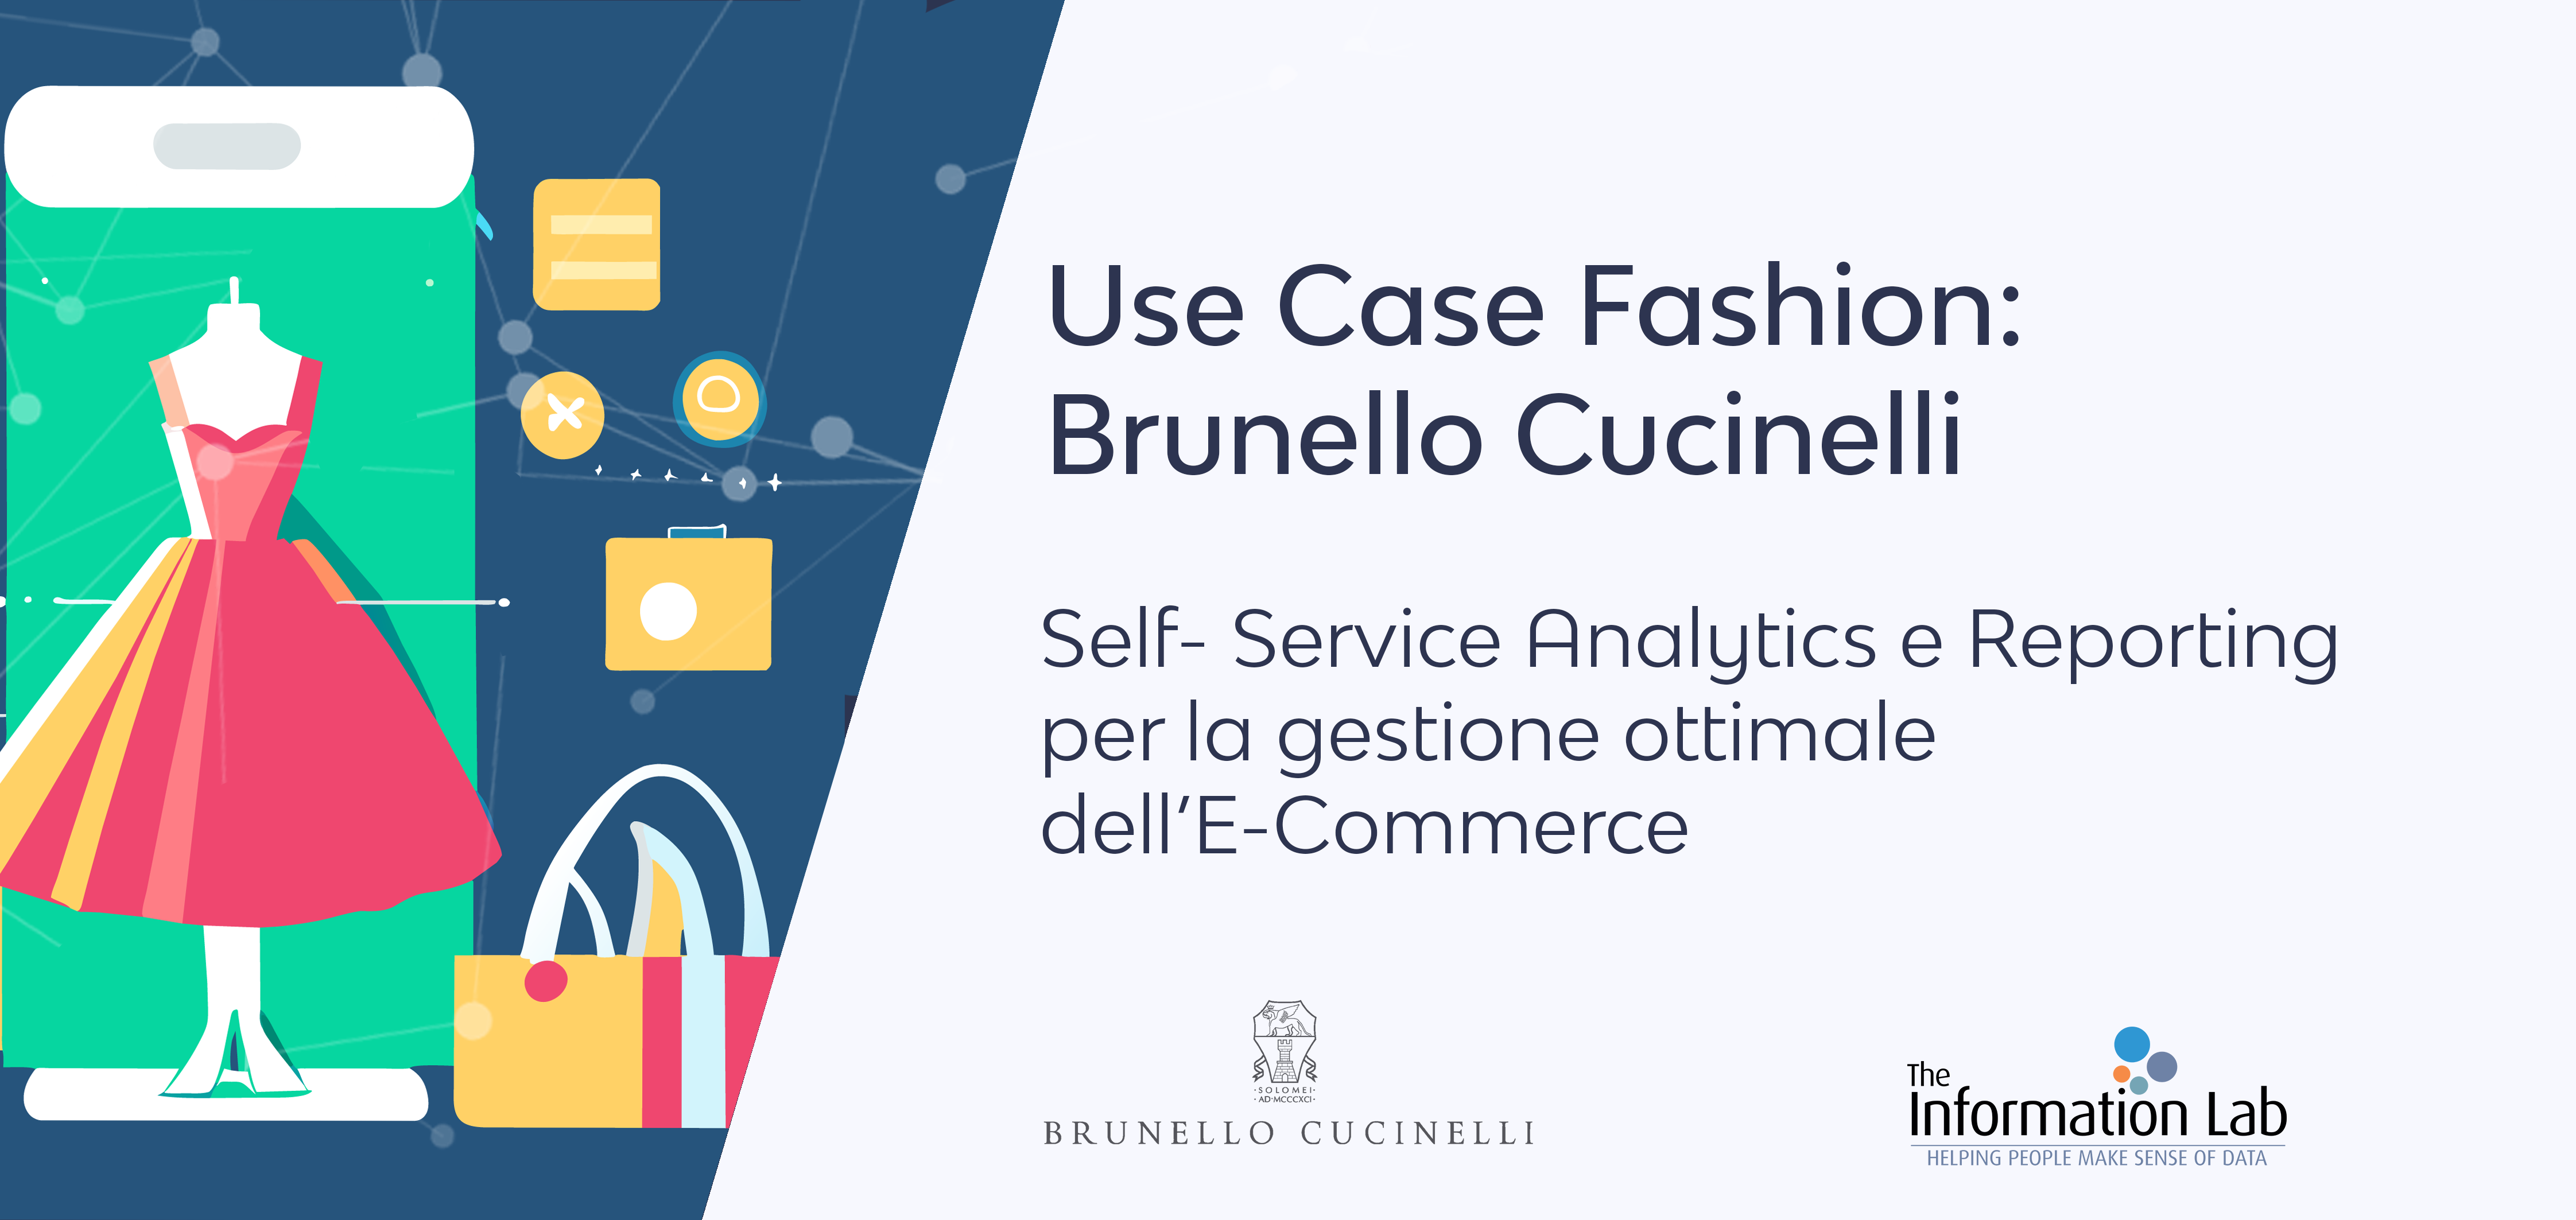 Use Case Luxury: Brunello Cucinelli